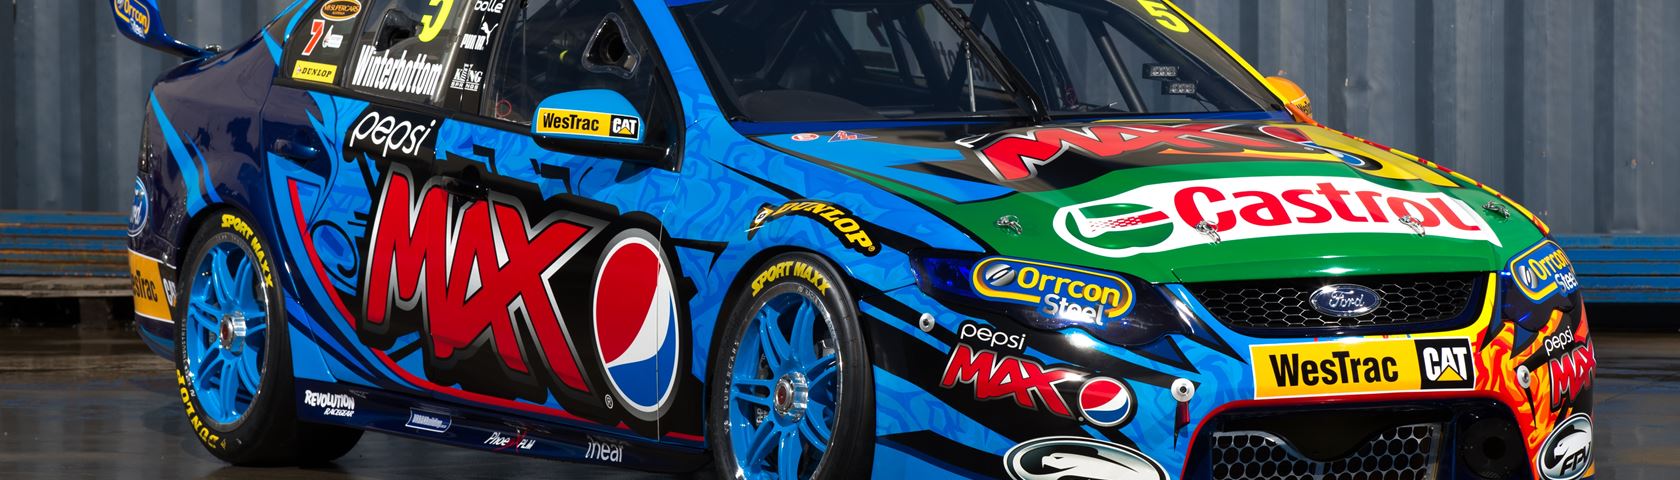 Fpr Pepsi Max V8 Supercar - Pepsi Max V8 Supercar - HD Wallpaper 